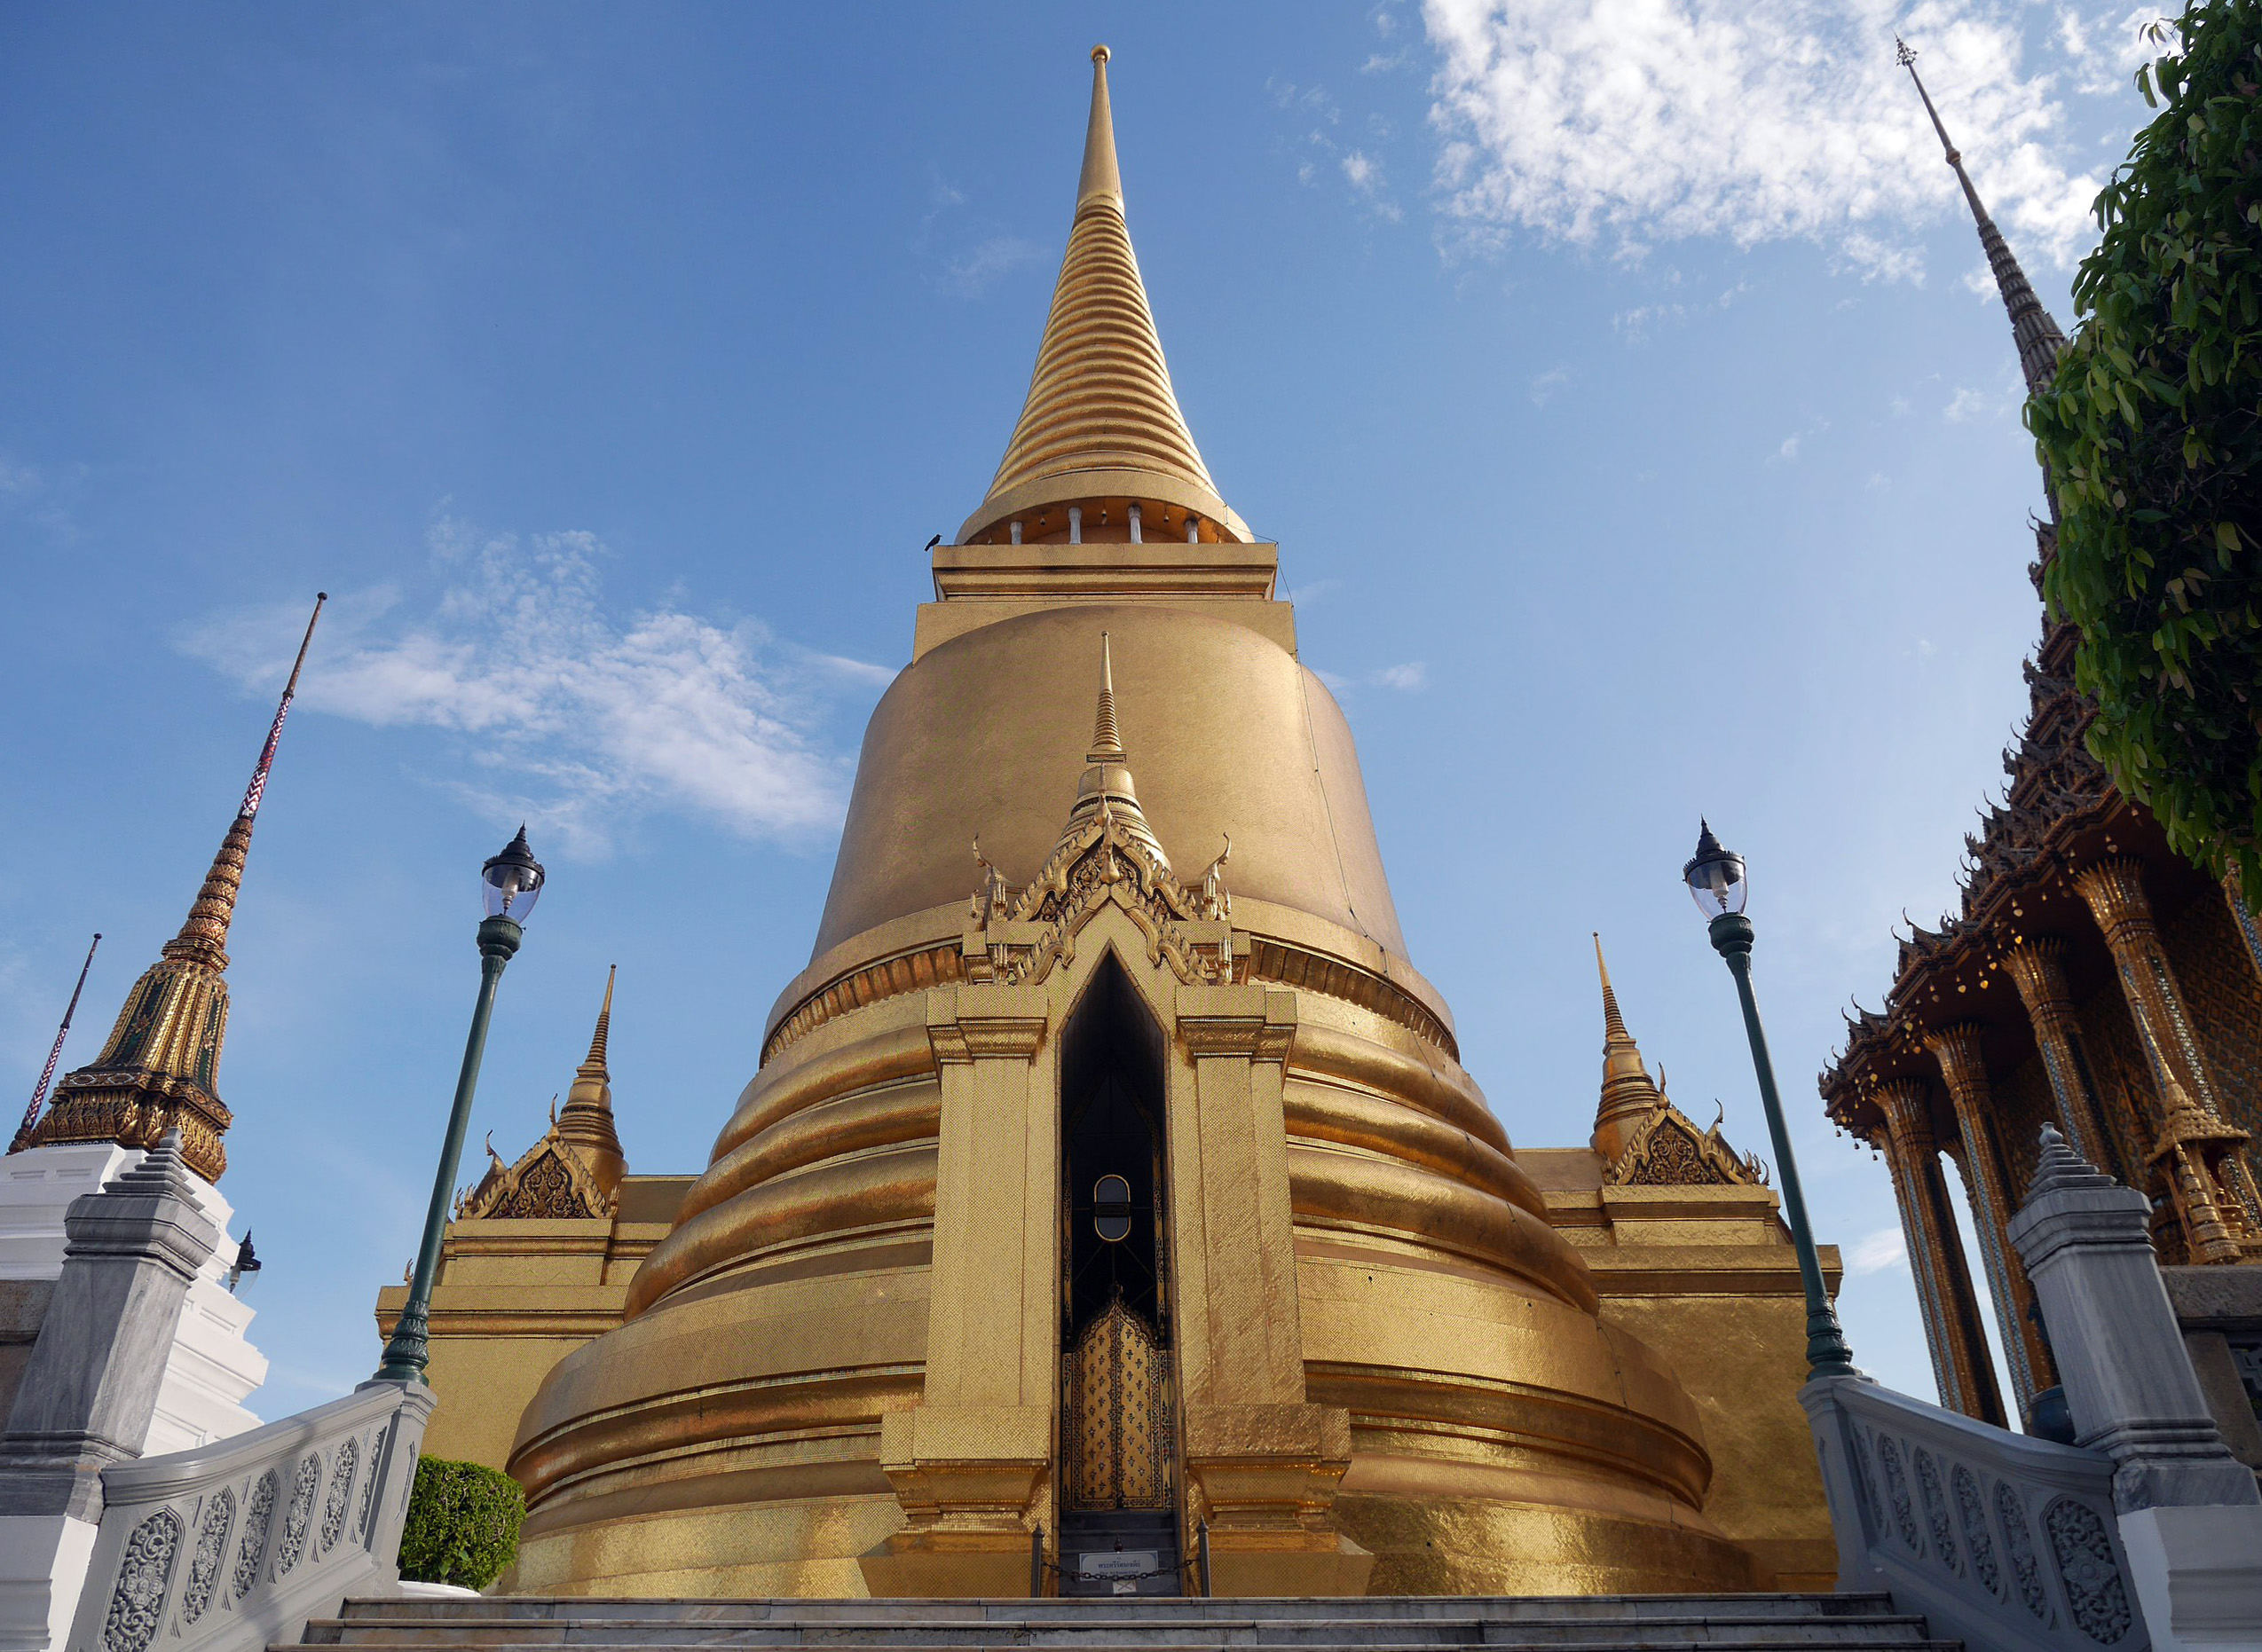 Great Buddha of Thailand - Wikipedia